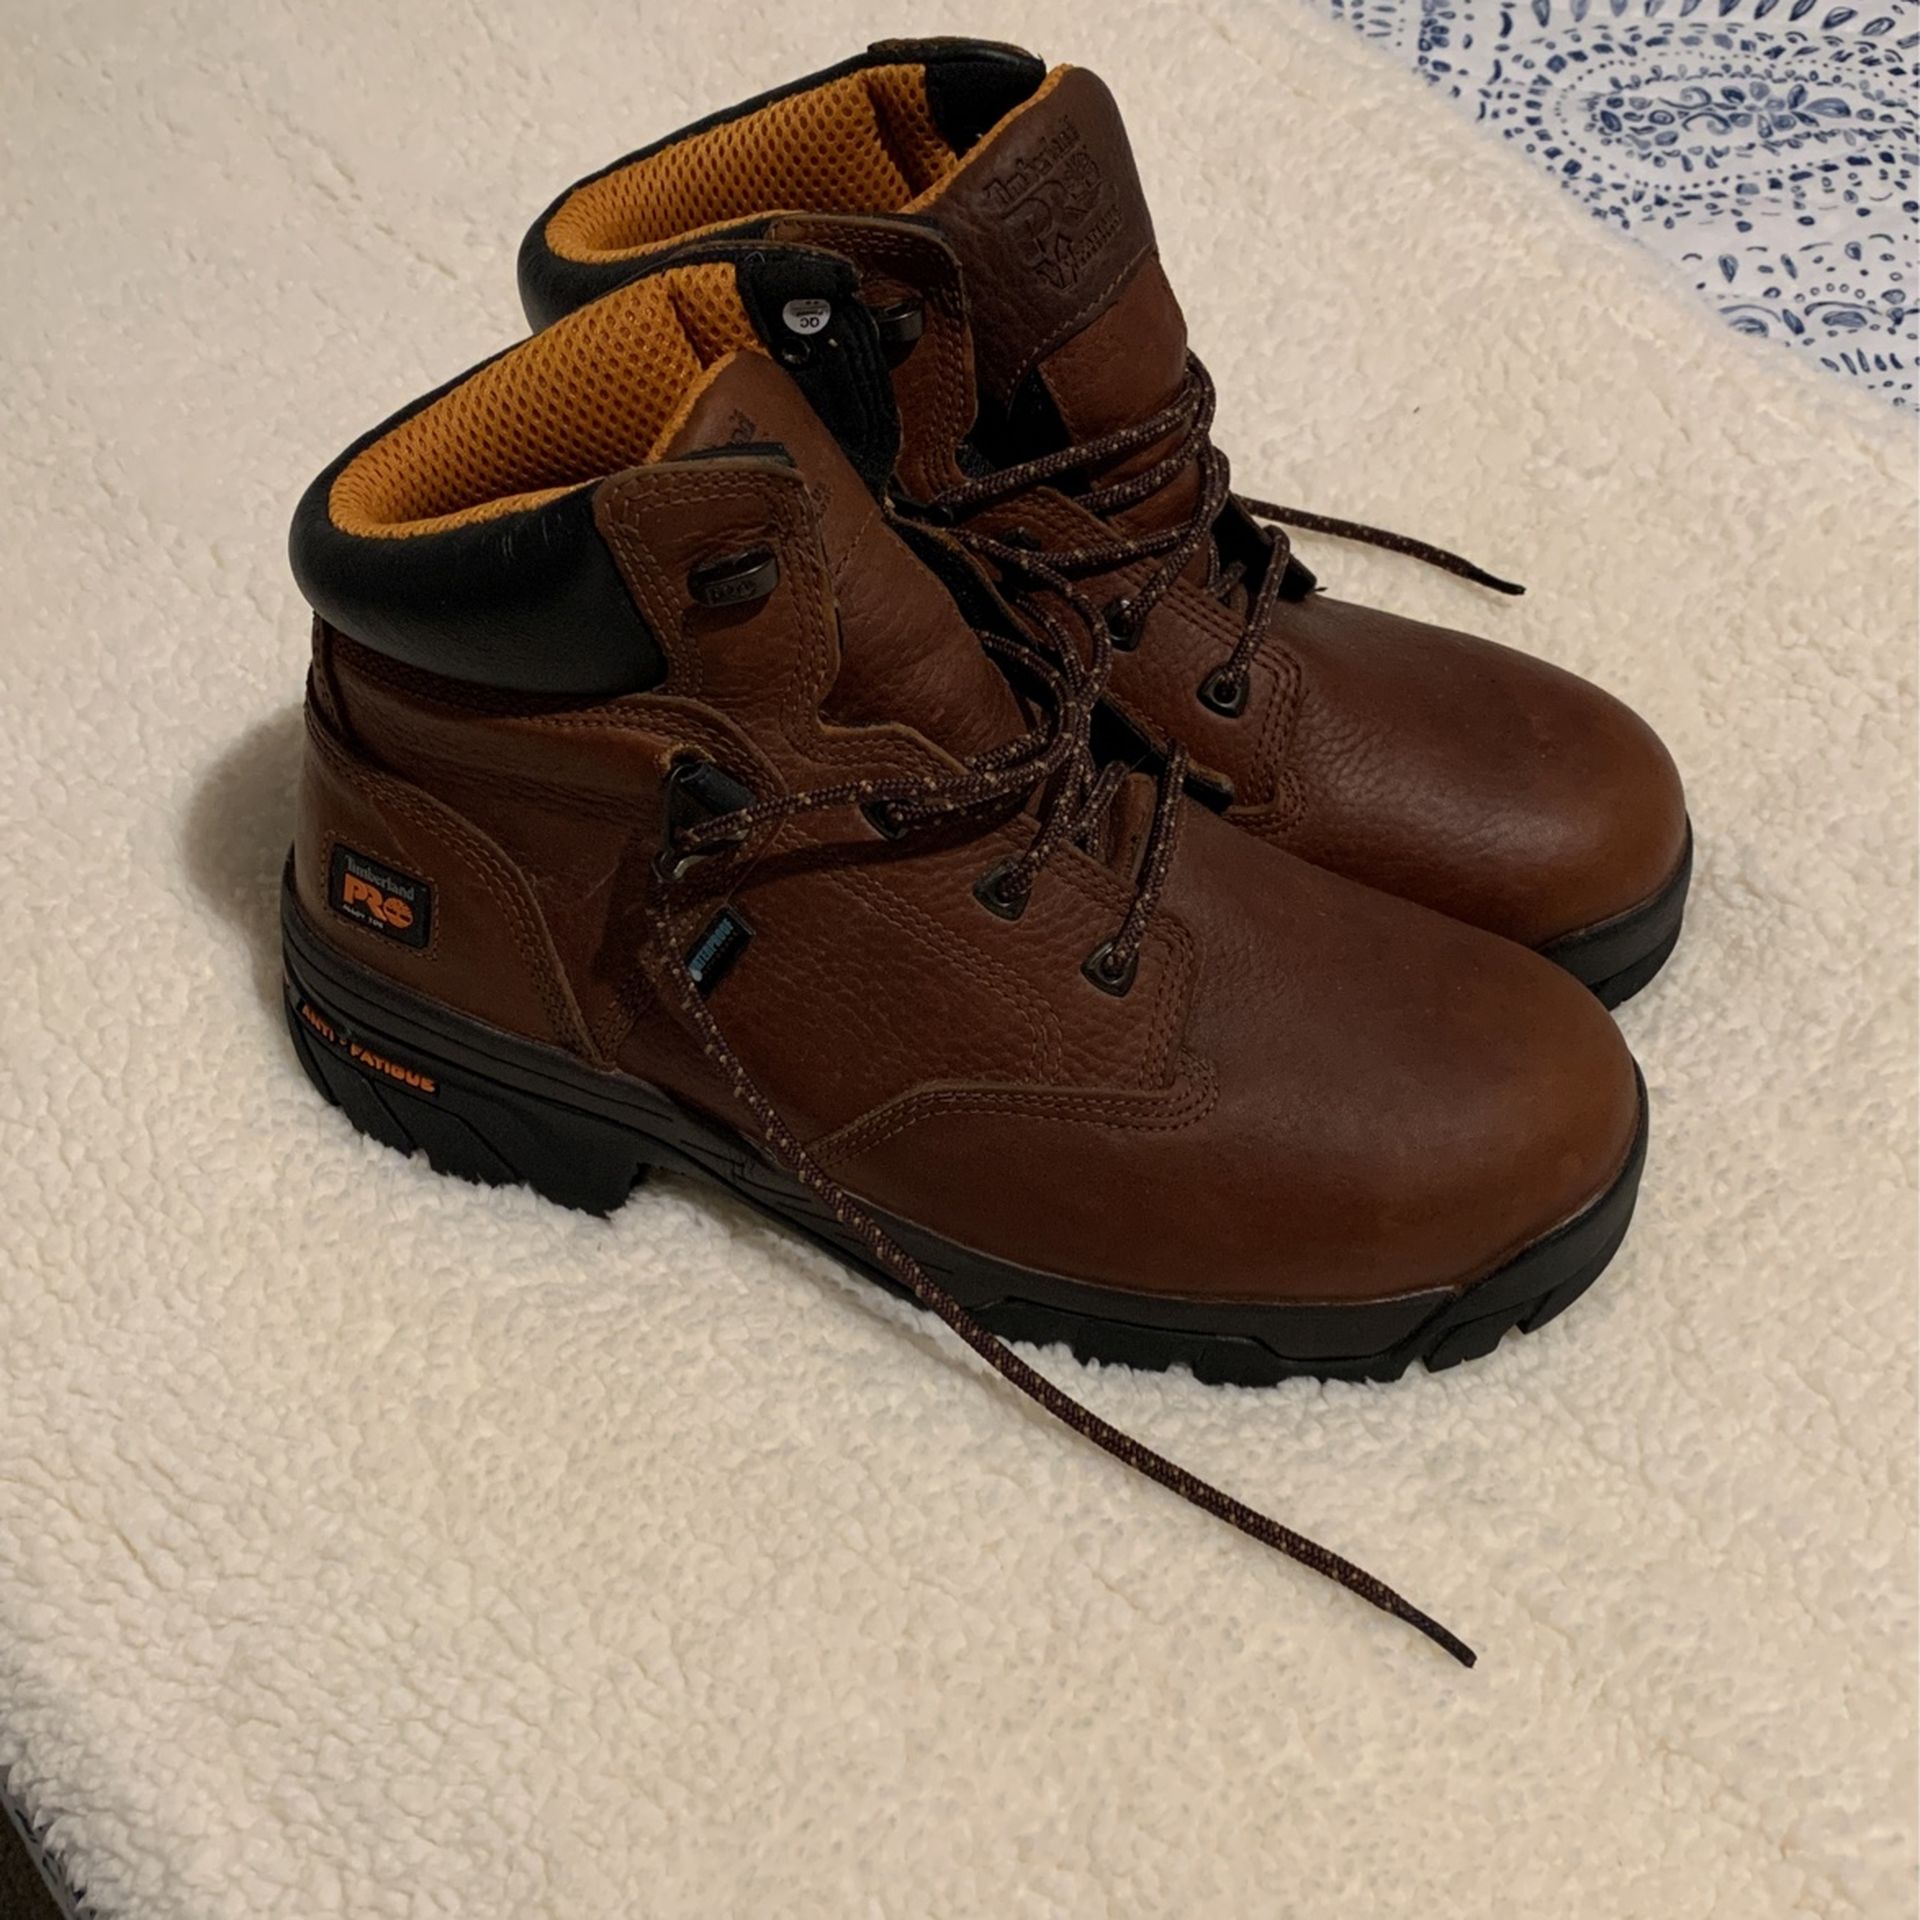 Timberland Pro work boots Size 11 